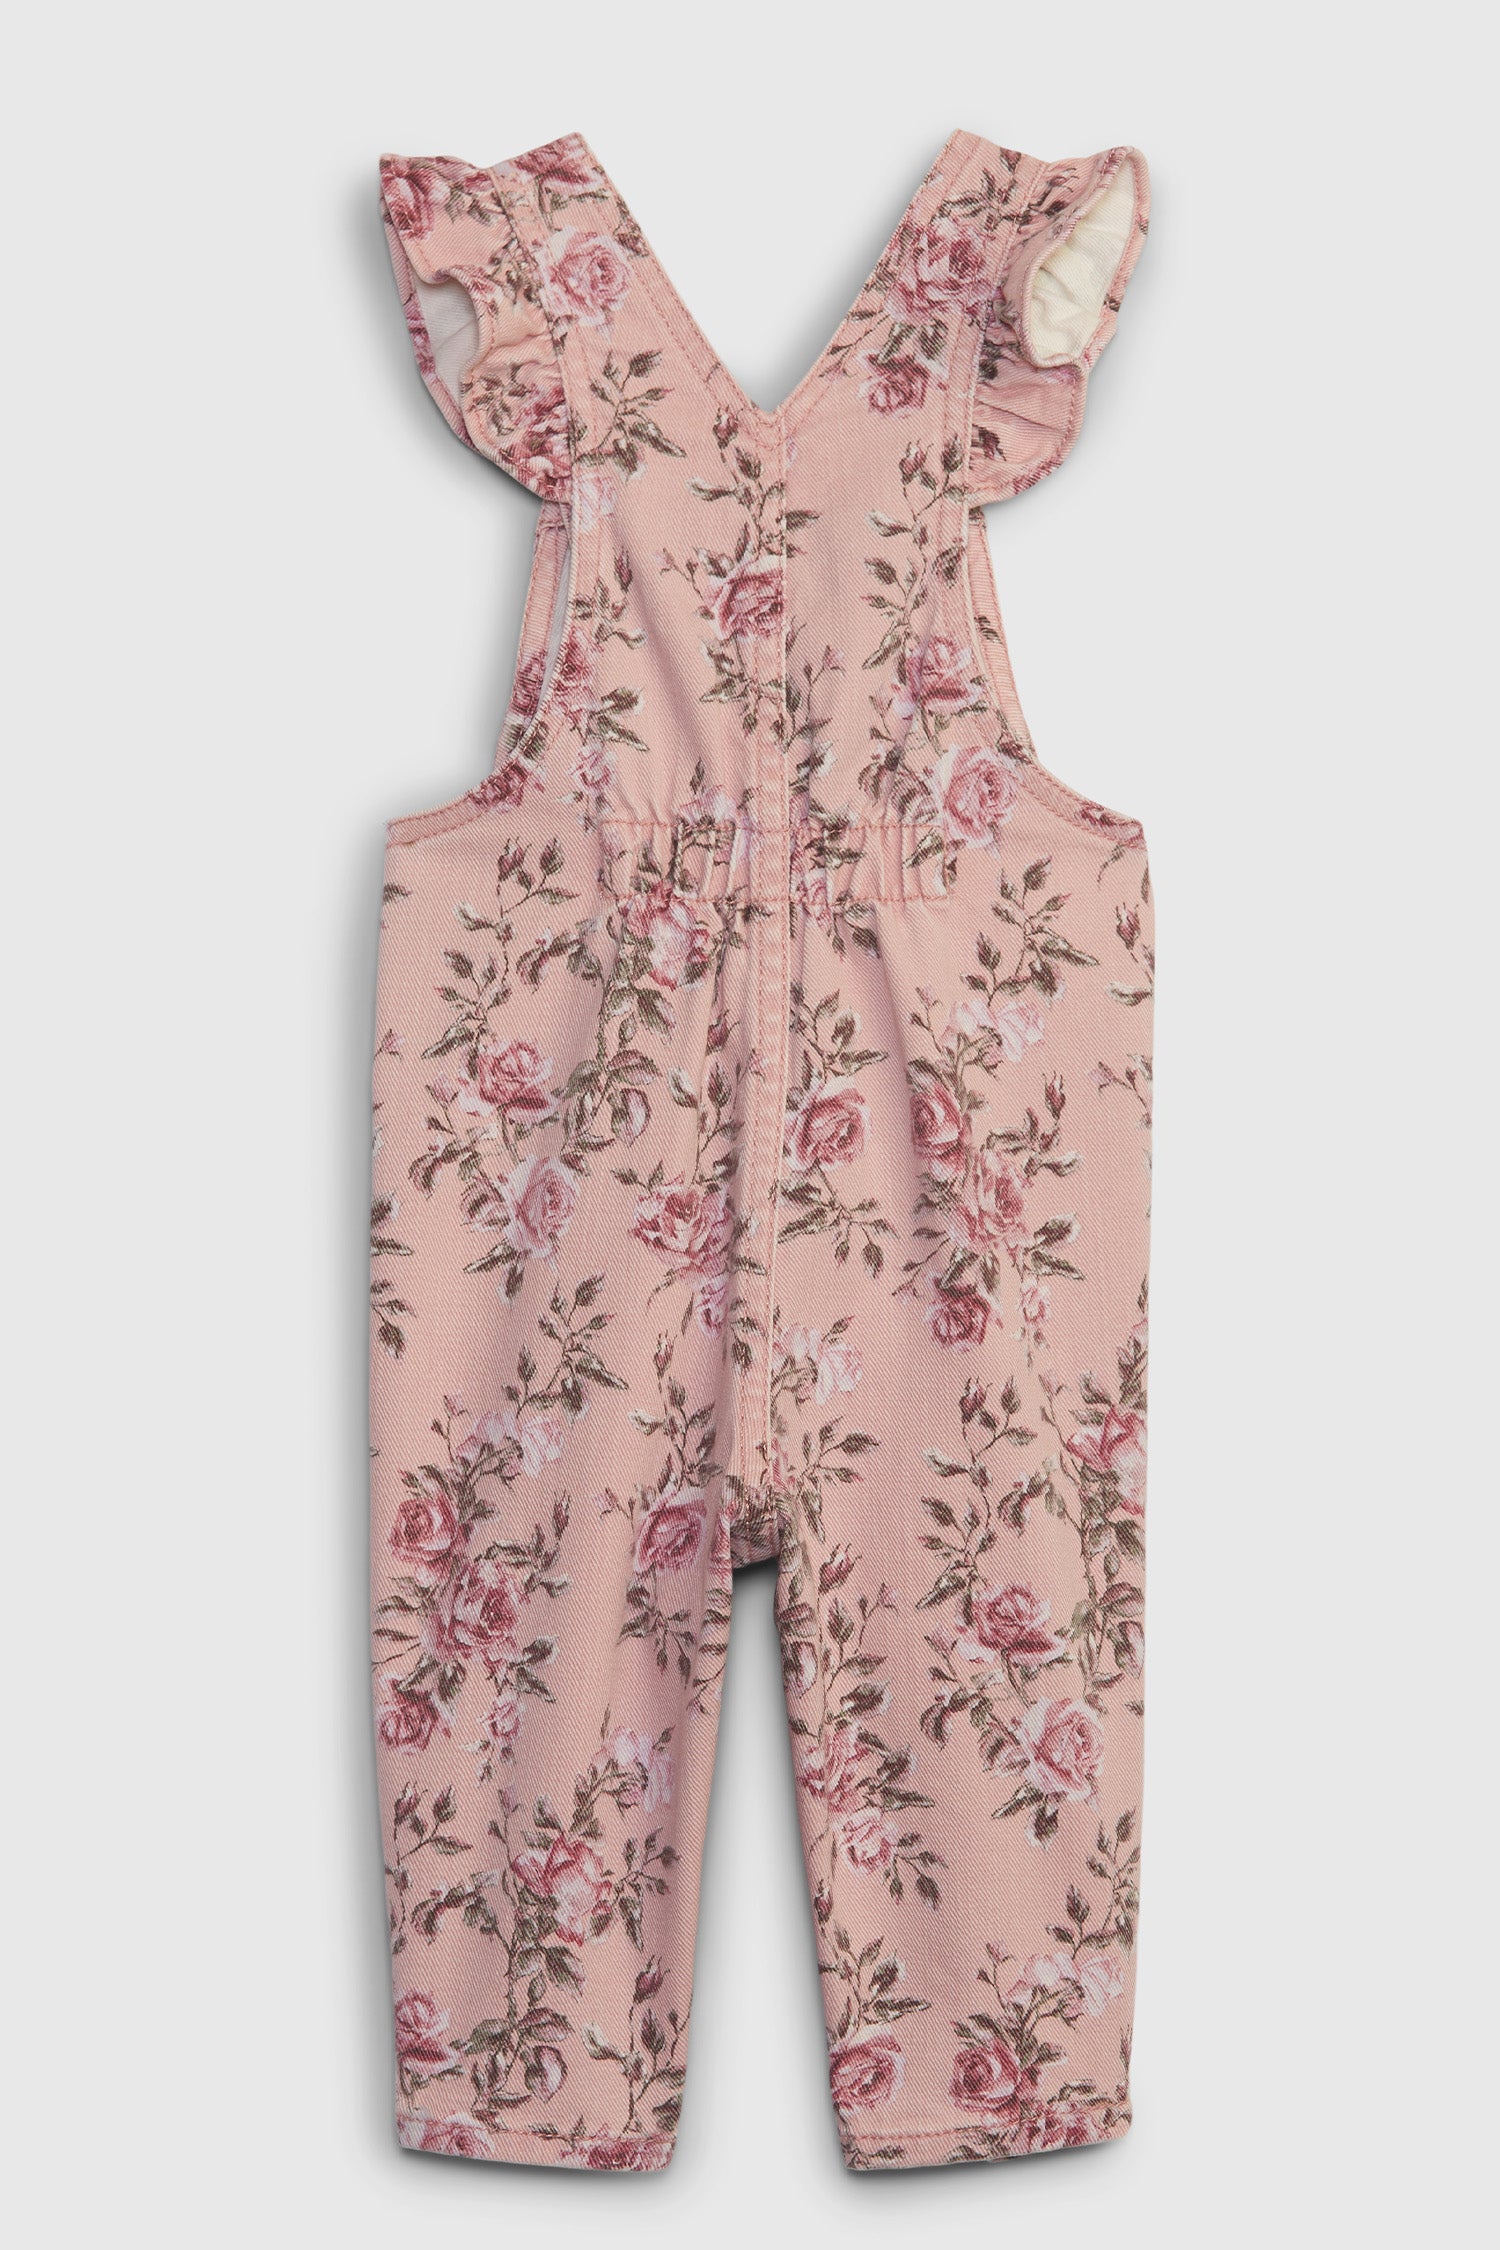 Image showing back of baby's pink floral denim overalls